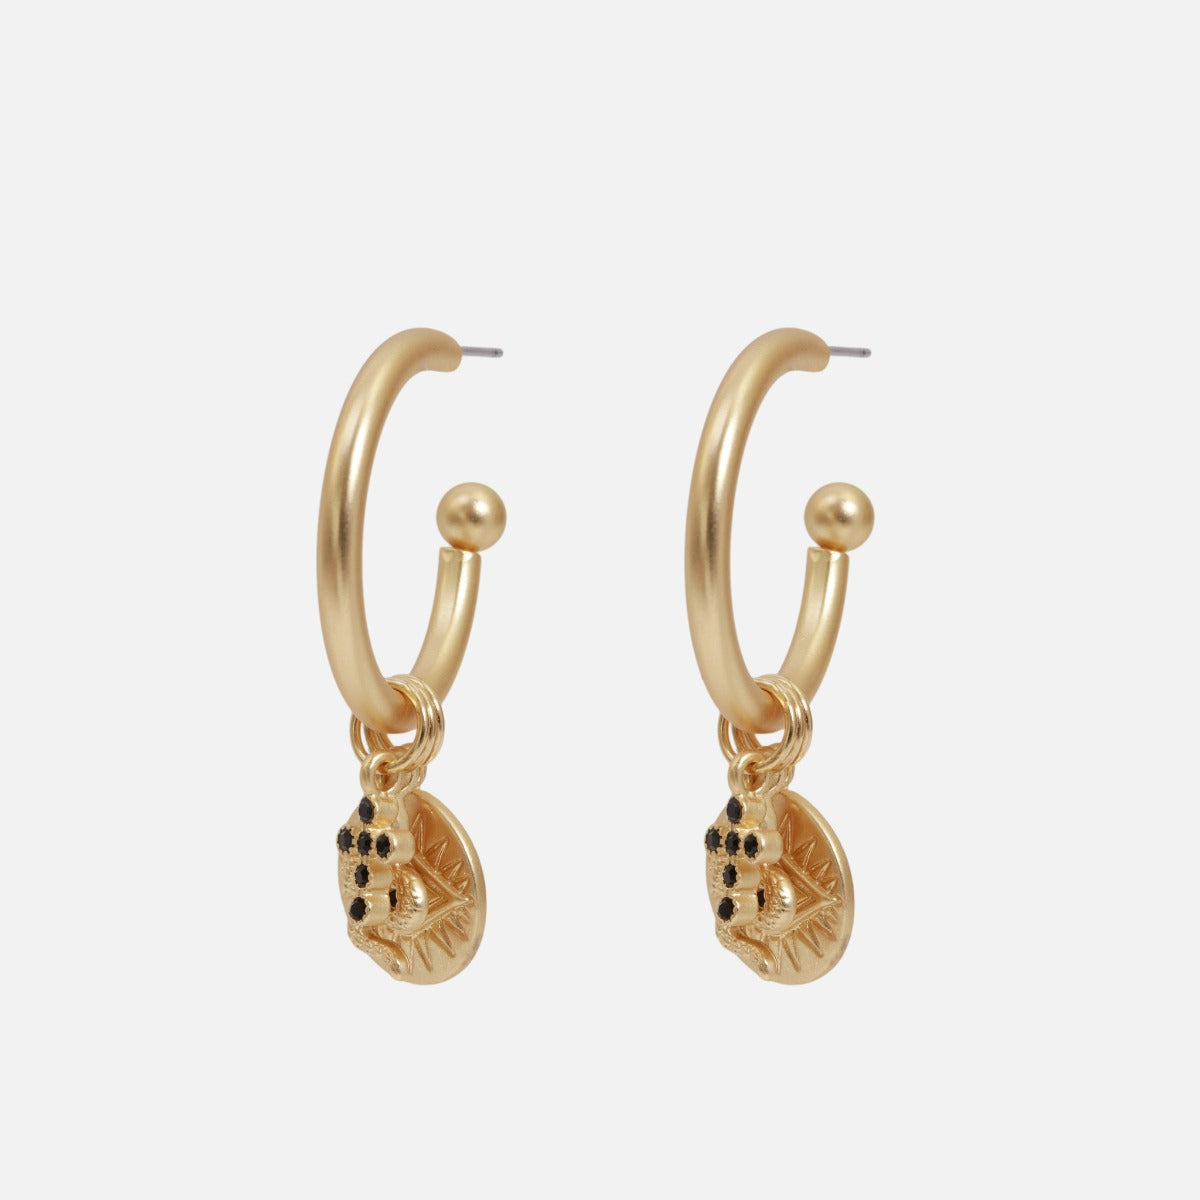 Hoops earrings with eye, snake and cross medallions